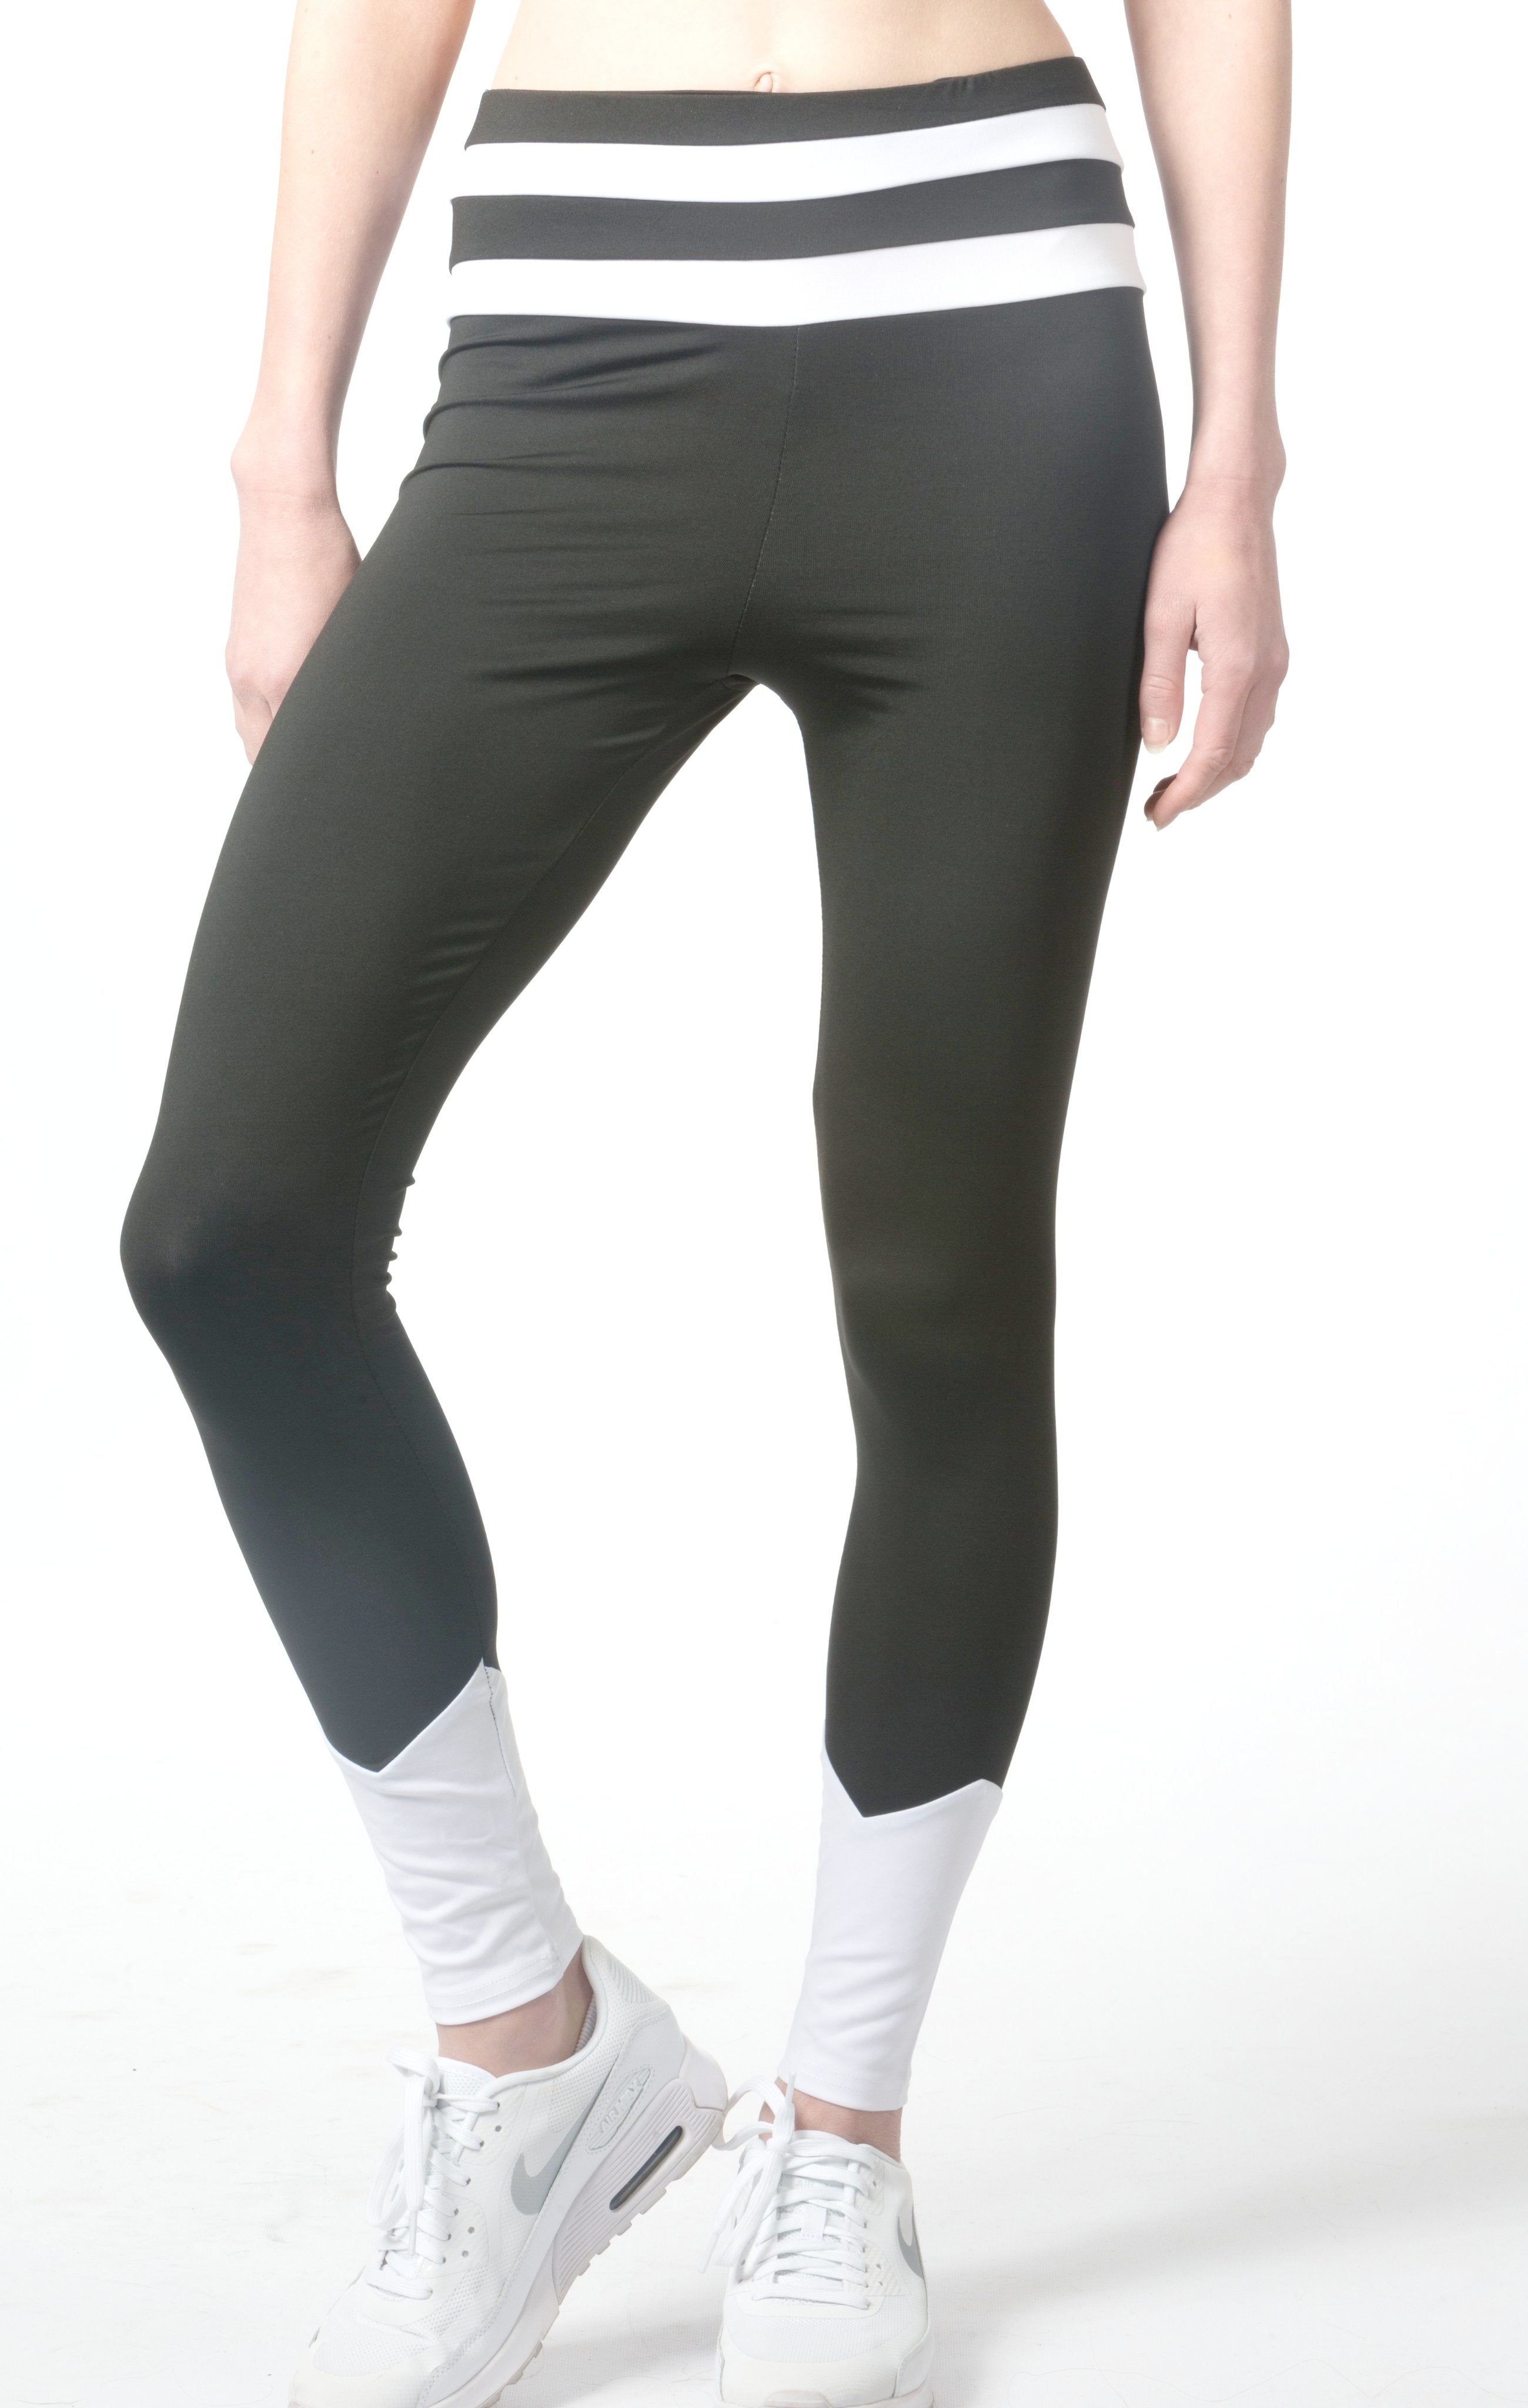 Women's Four Way Stretch Activewear Slim Legging Yoga Pants ITEM NO:EM180016